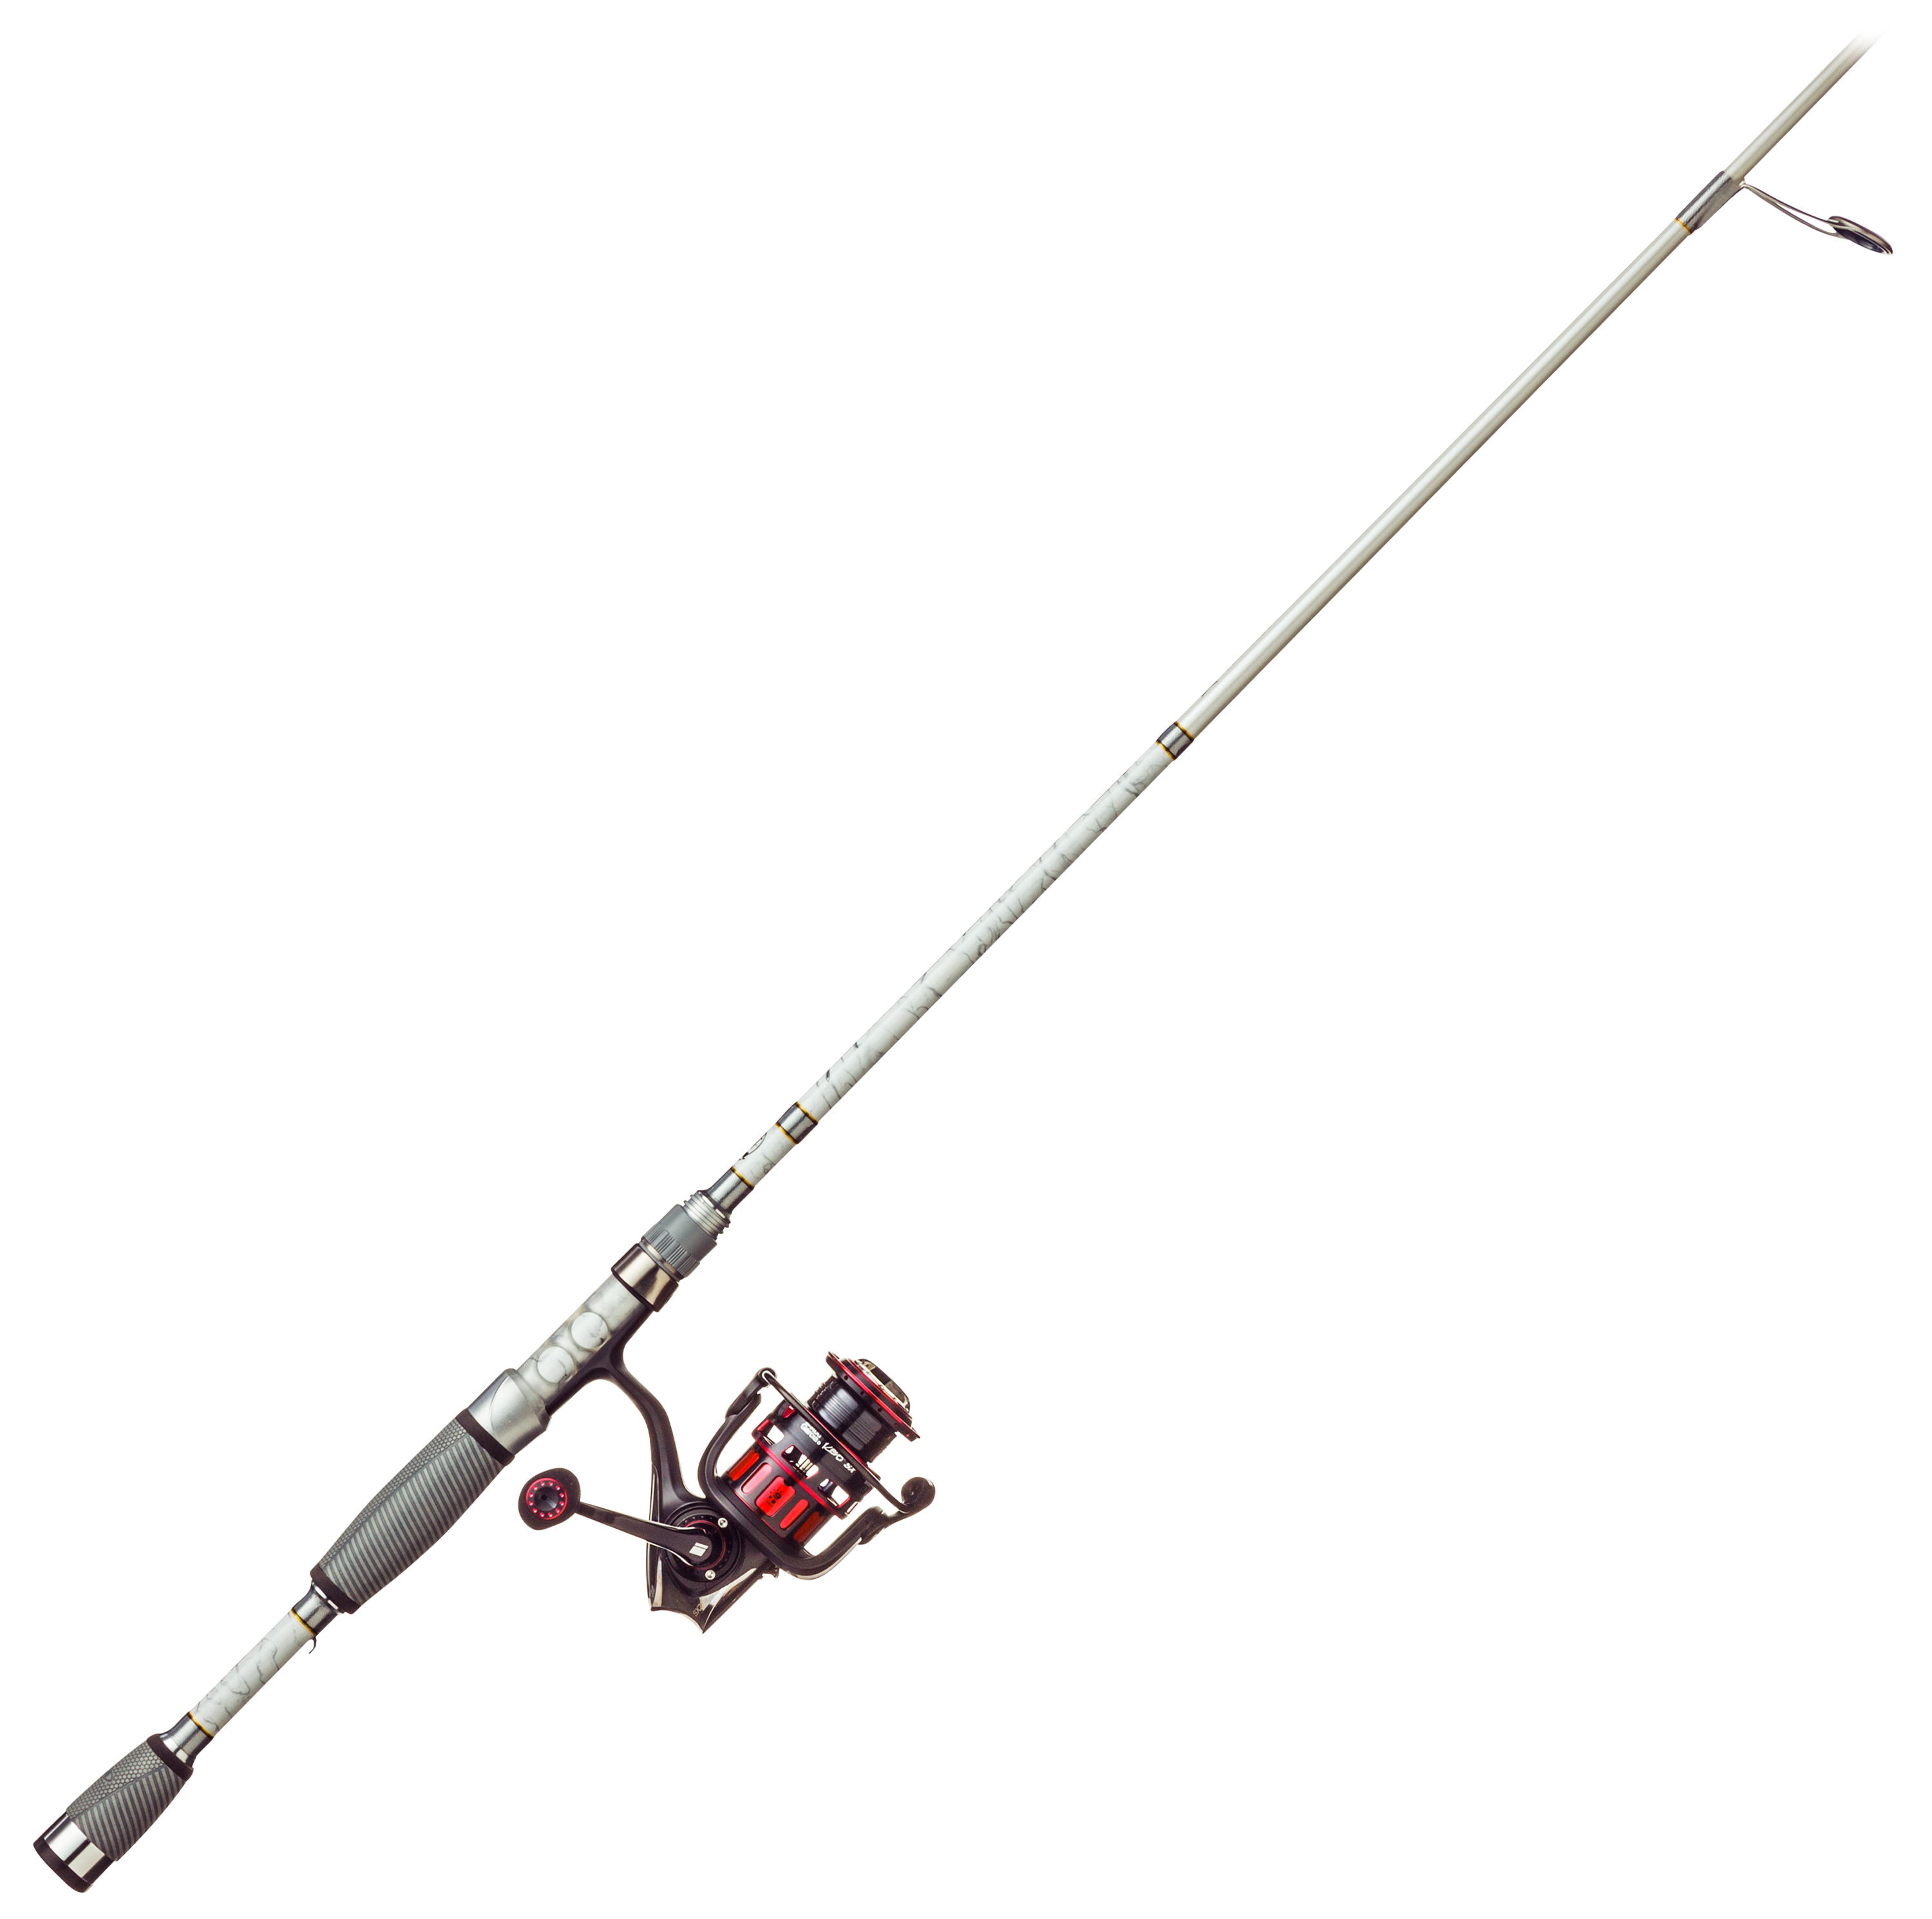 Abu Garcia Revo SX/Bass Pro Shops Johnny Morris CarbonLite Spinning Rod and Reel Combo - Model REVO2SX20/JCT66MSF-2